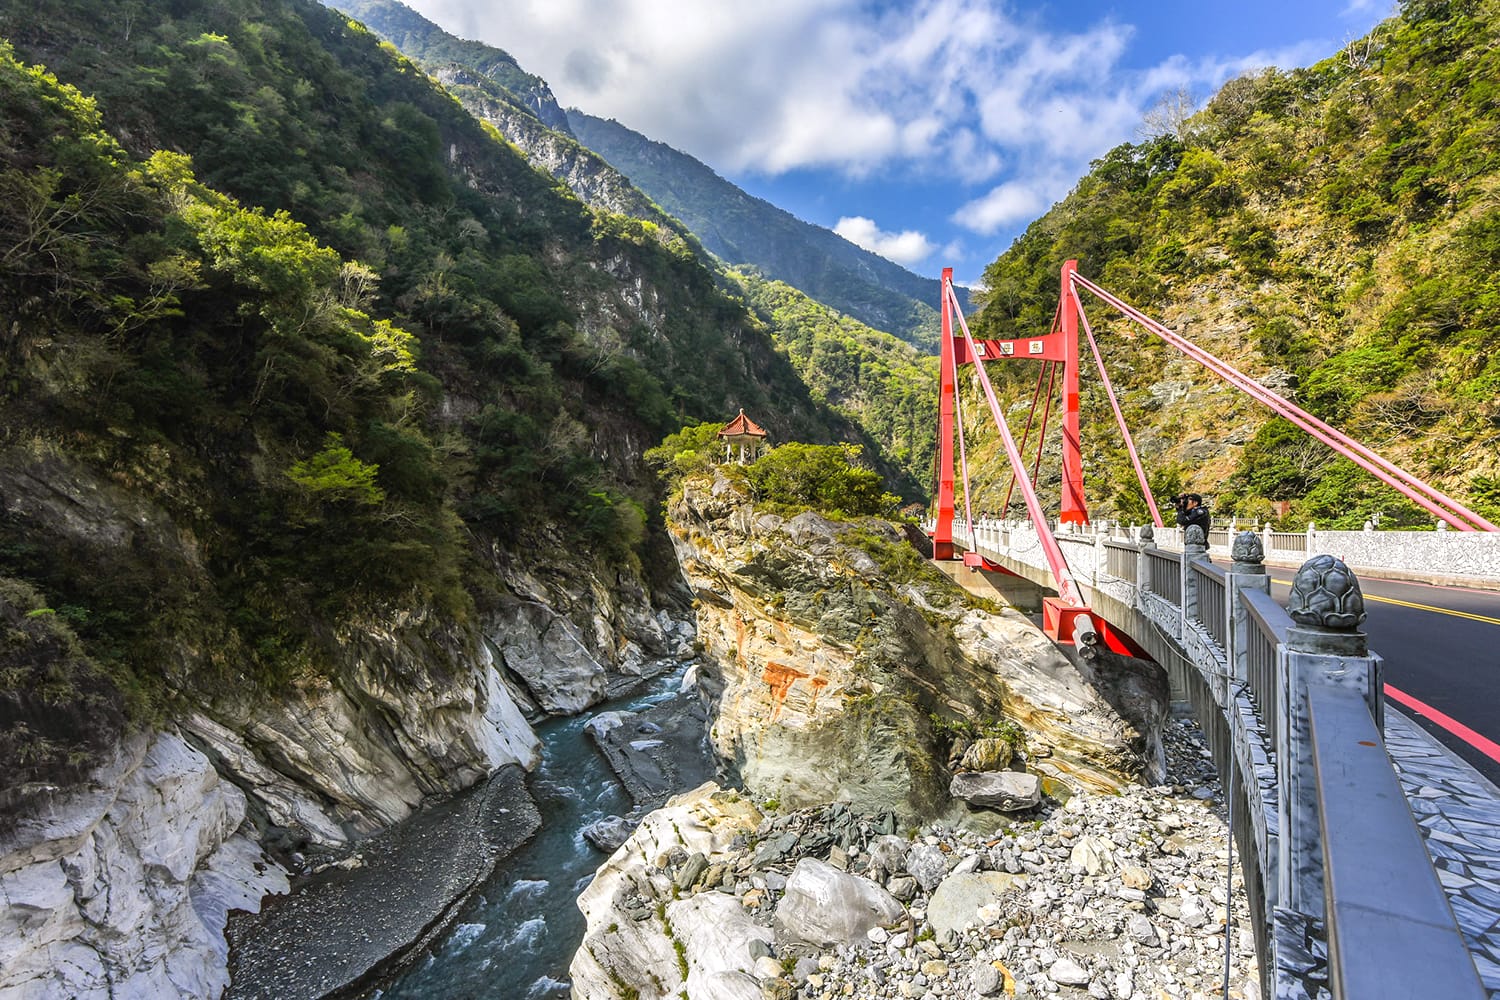 Red Bridge (Chinese Name"Cimu Bridge") on Liwu River, Taroko National Park, Hualien, Taiwan